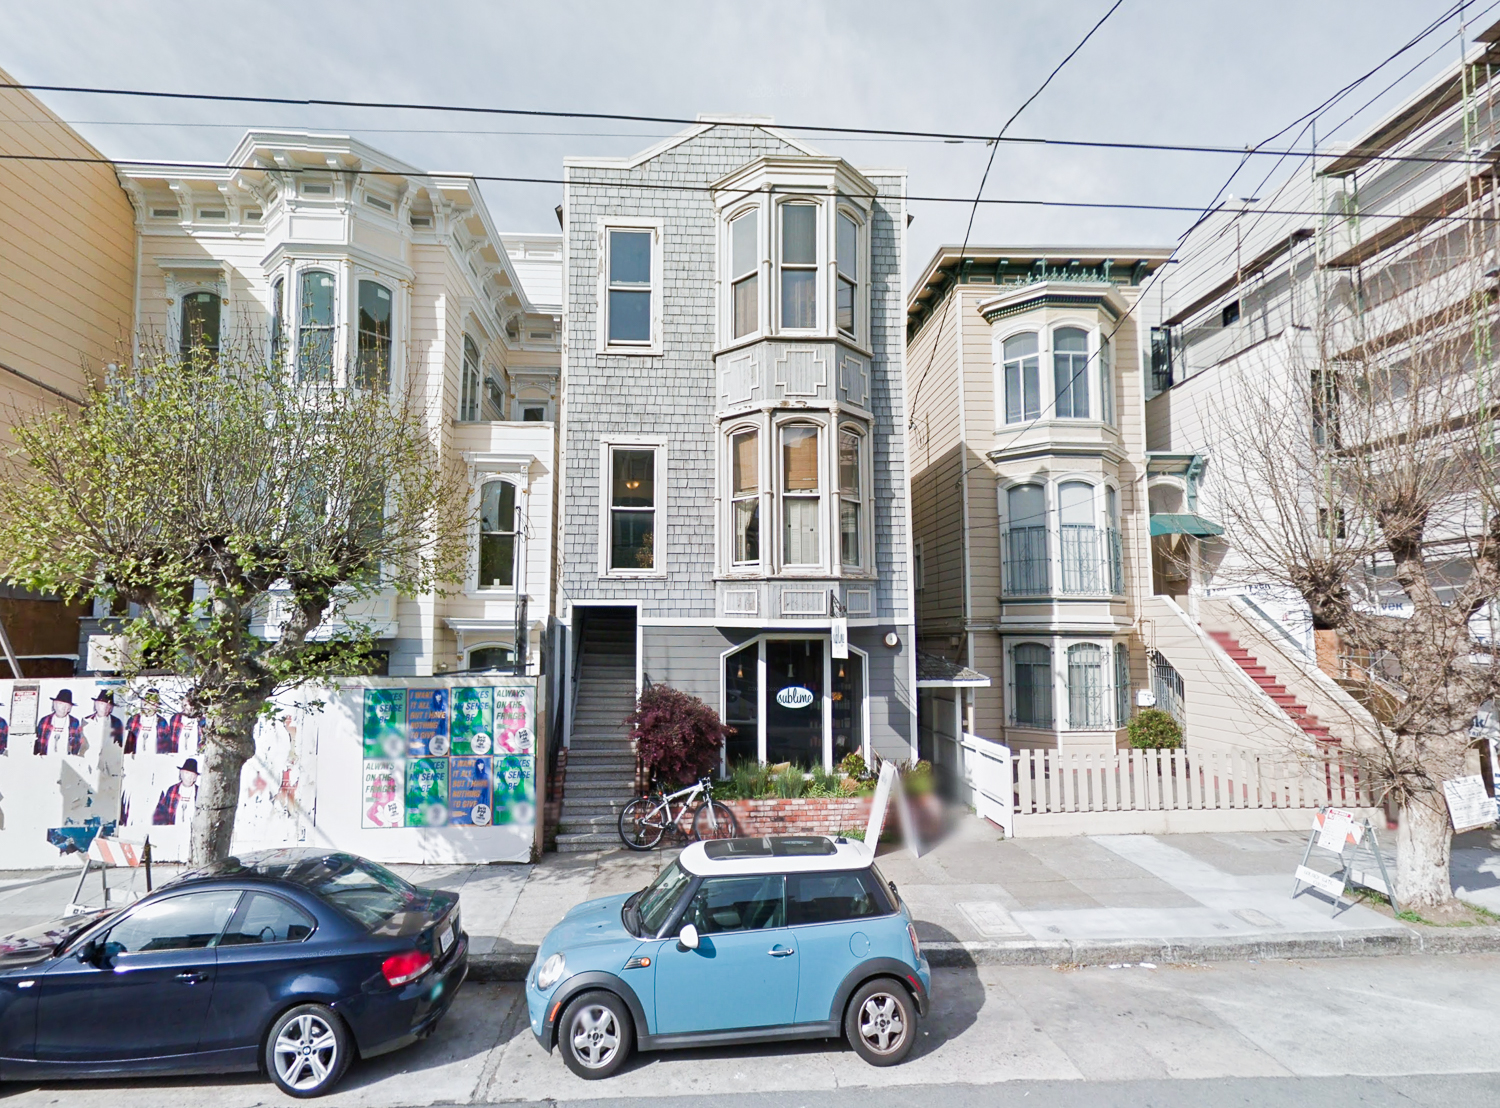 2536 California Street circa 2015, image via Google Street View